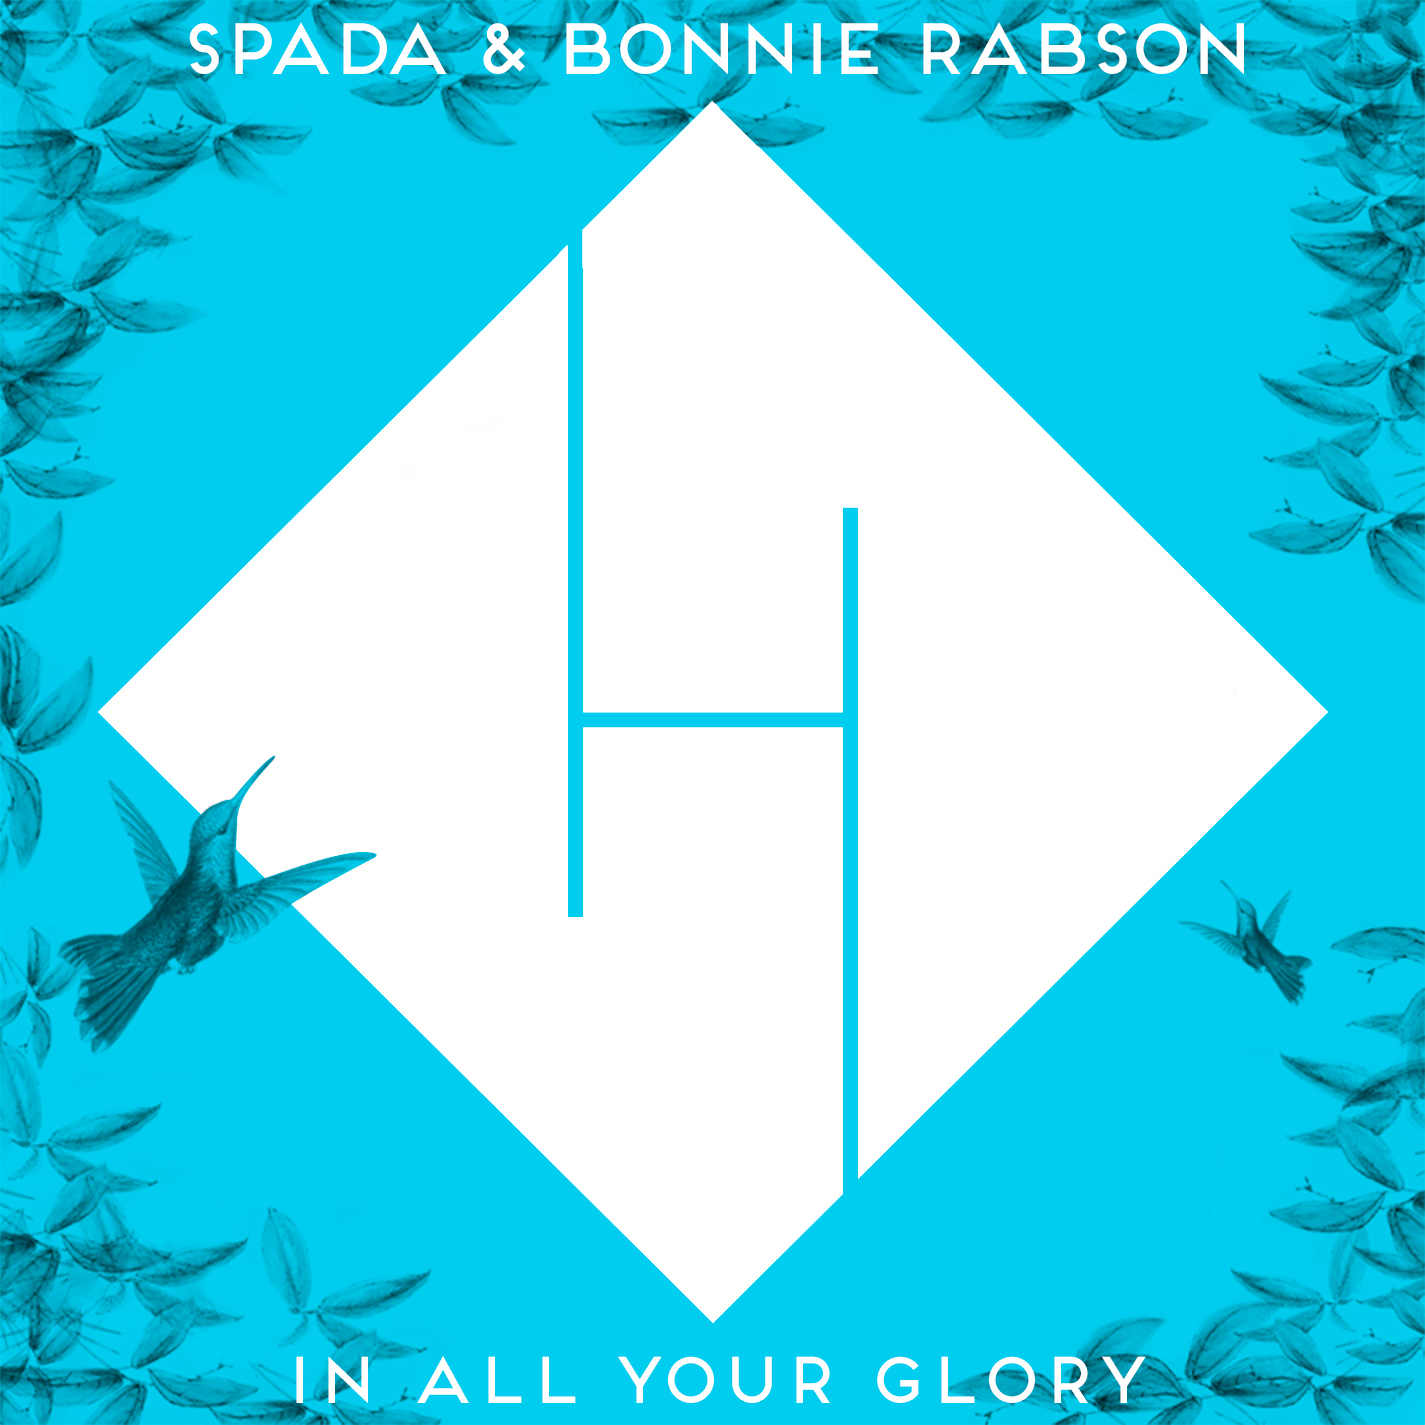 डाउनलोड करा In All Your Glory - Spada & Bonnie Rabson (Remix Boris Brejcha) PREVIEW